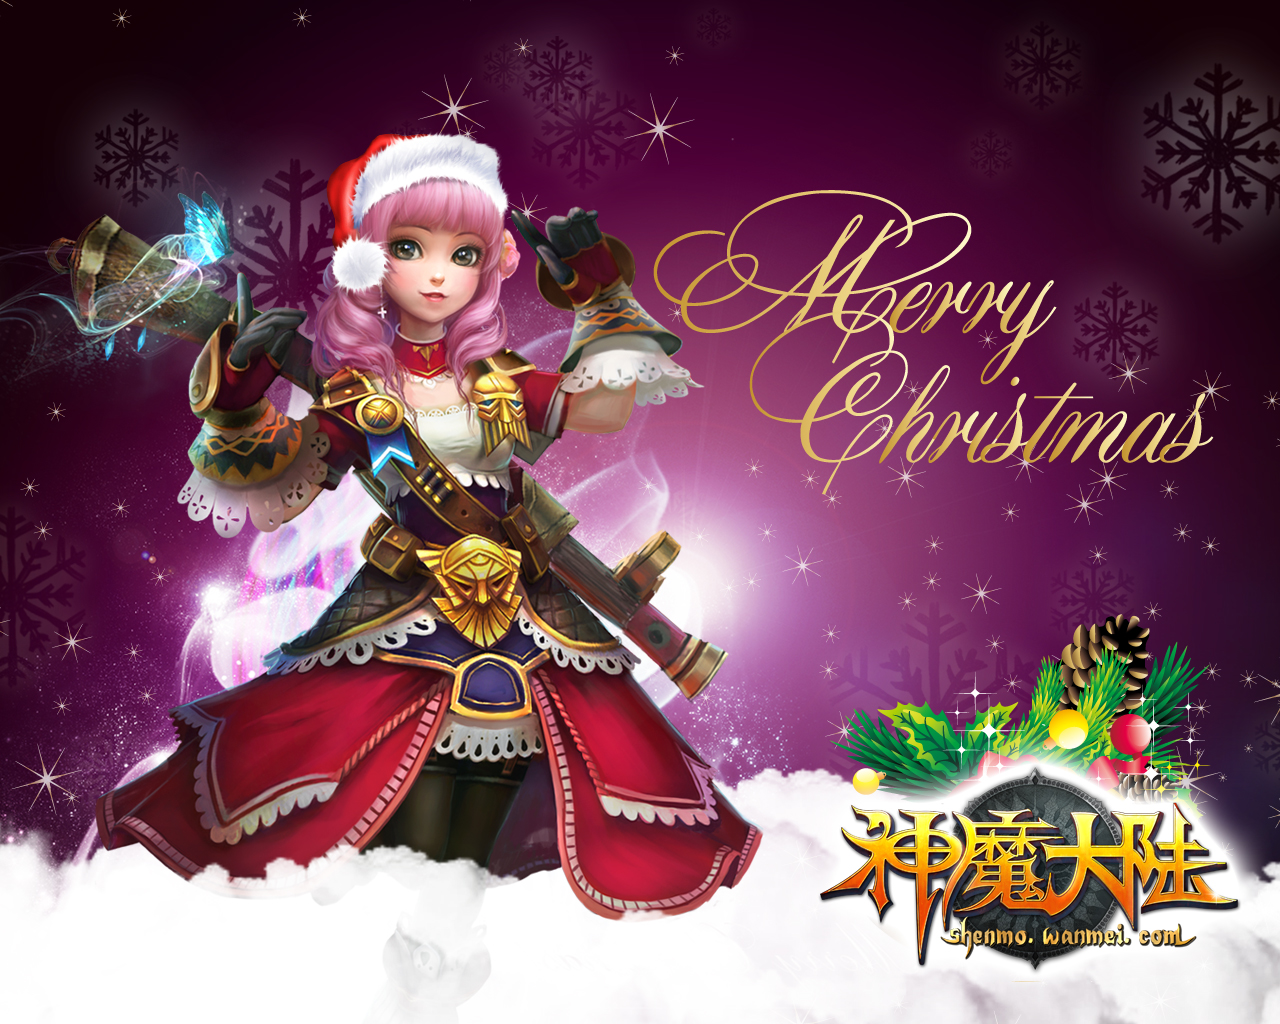  download Merry Christmas Anime Pirate Girl HD Wallpaper 1280x1024